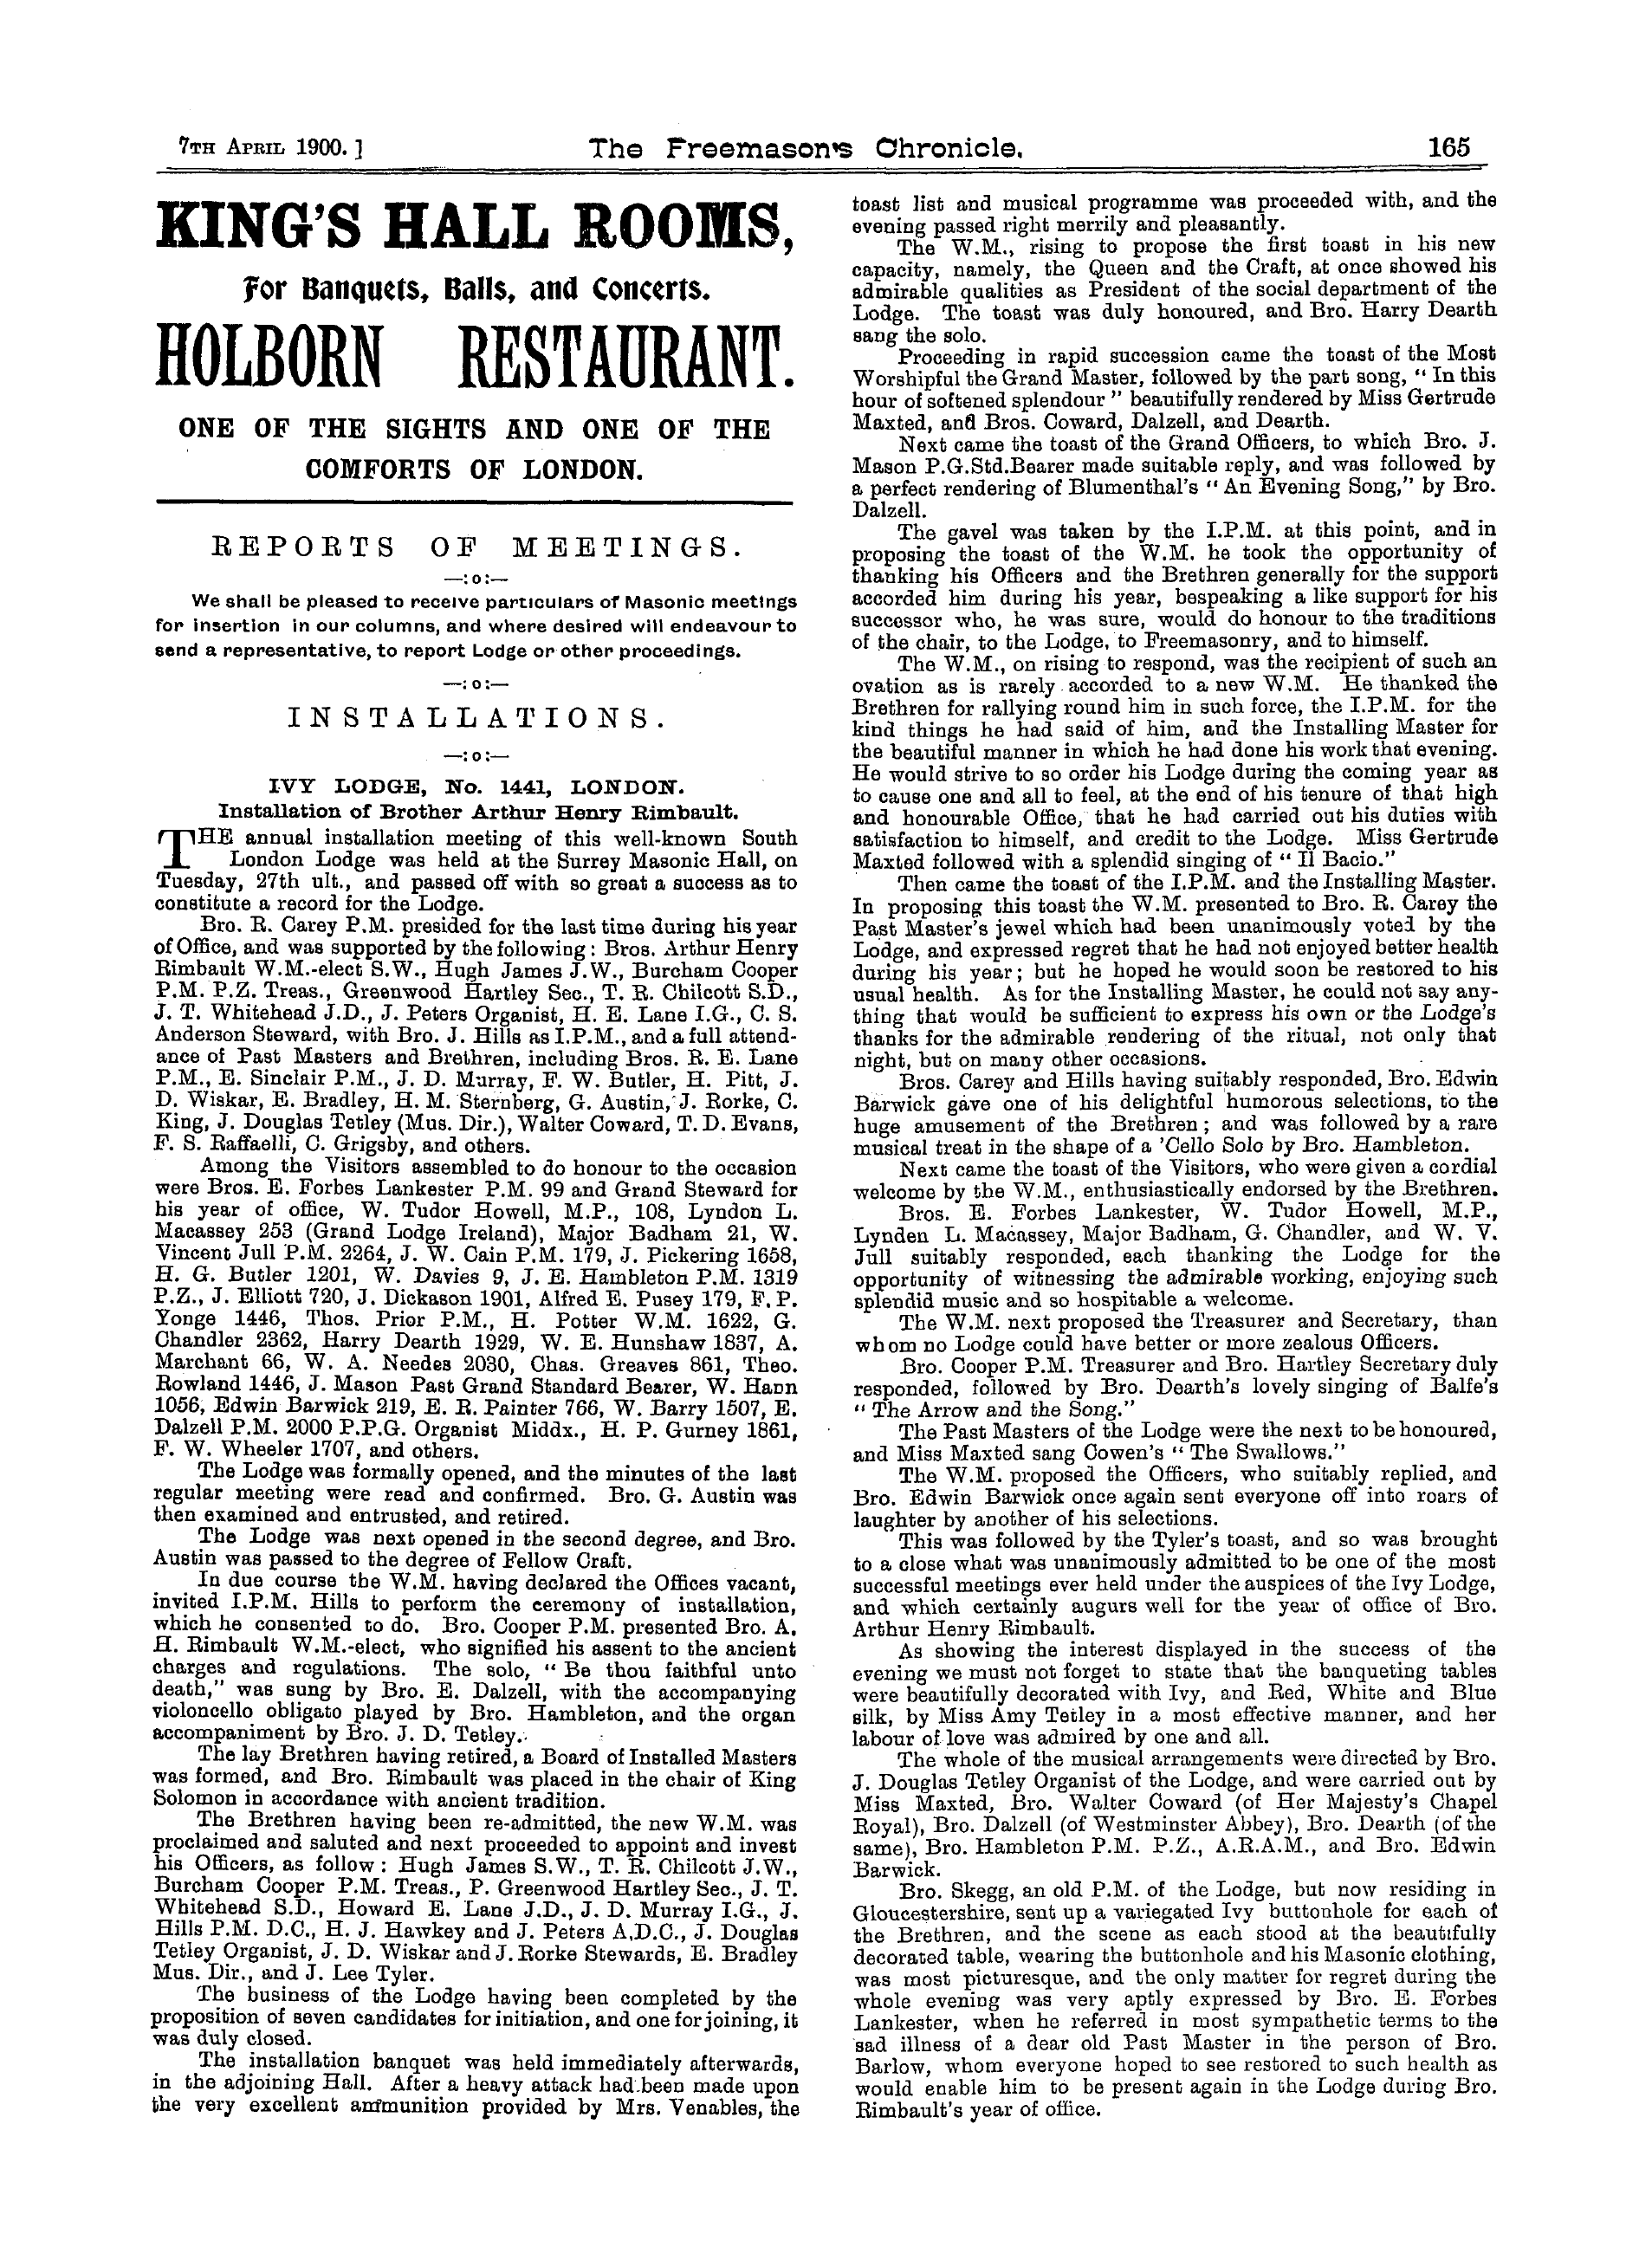 The Freemason's Chronicle: 1900-04-07: 9